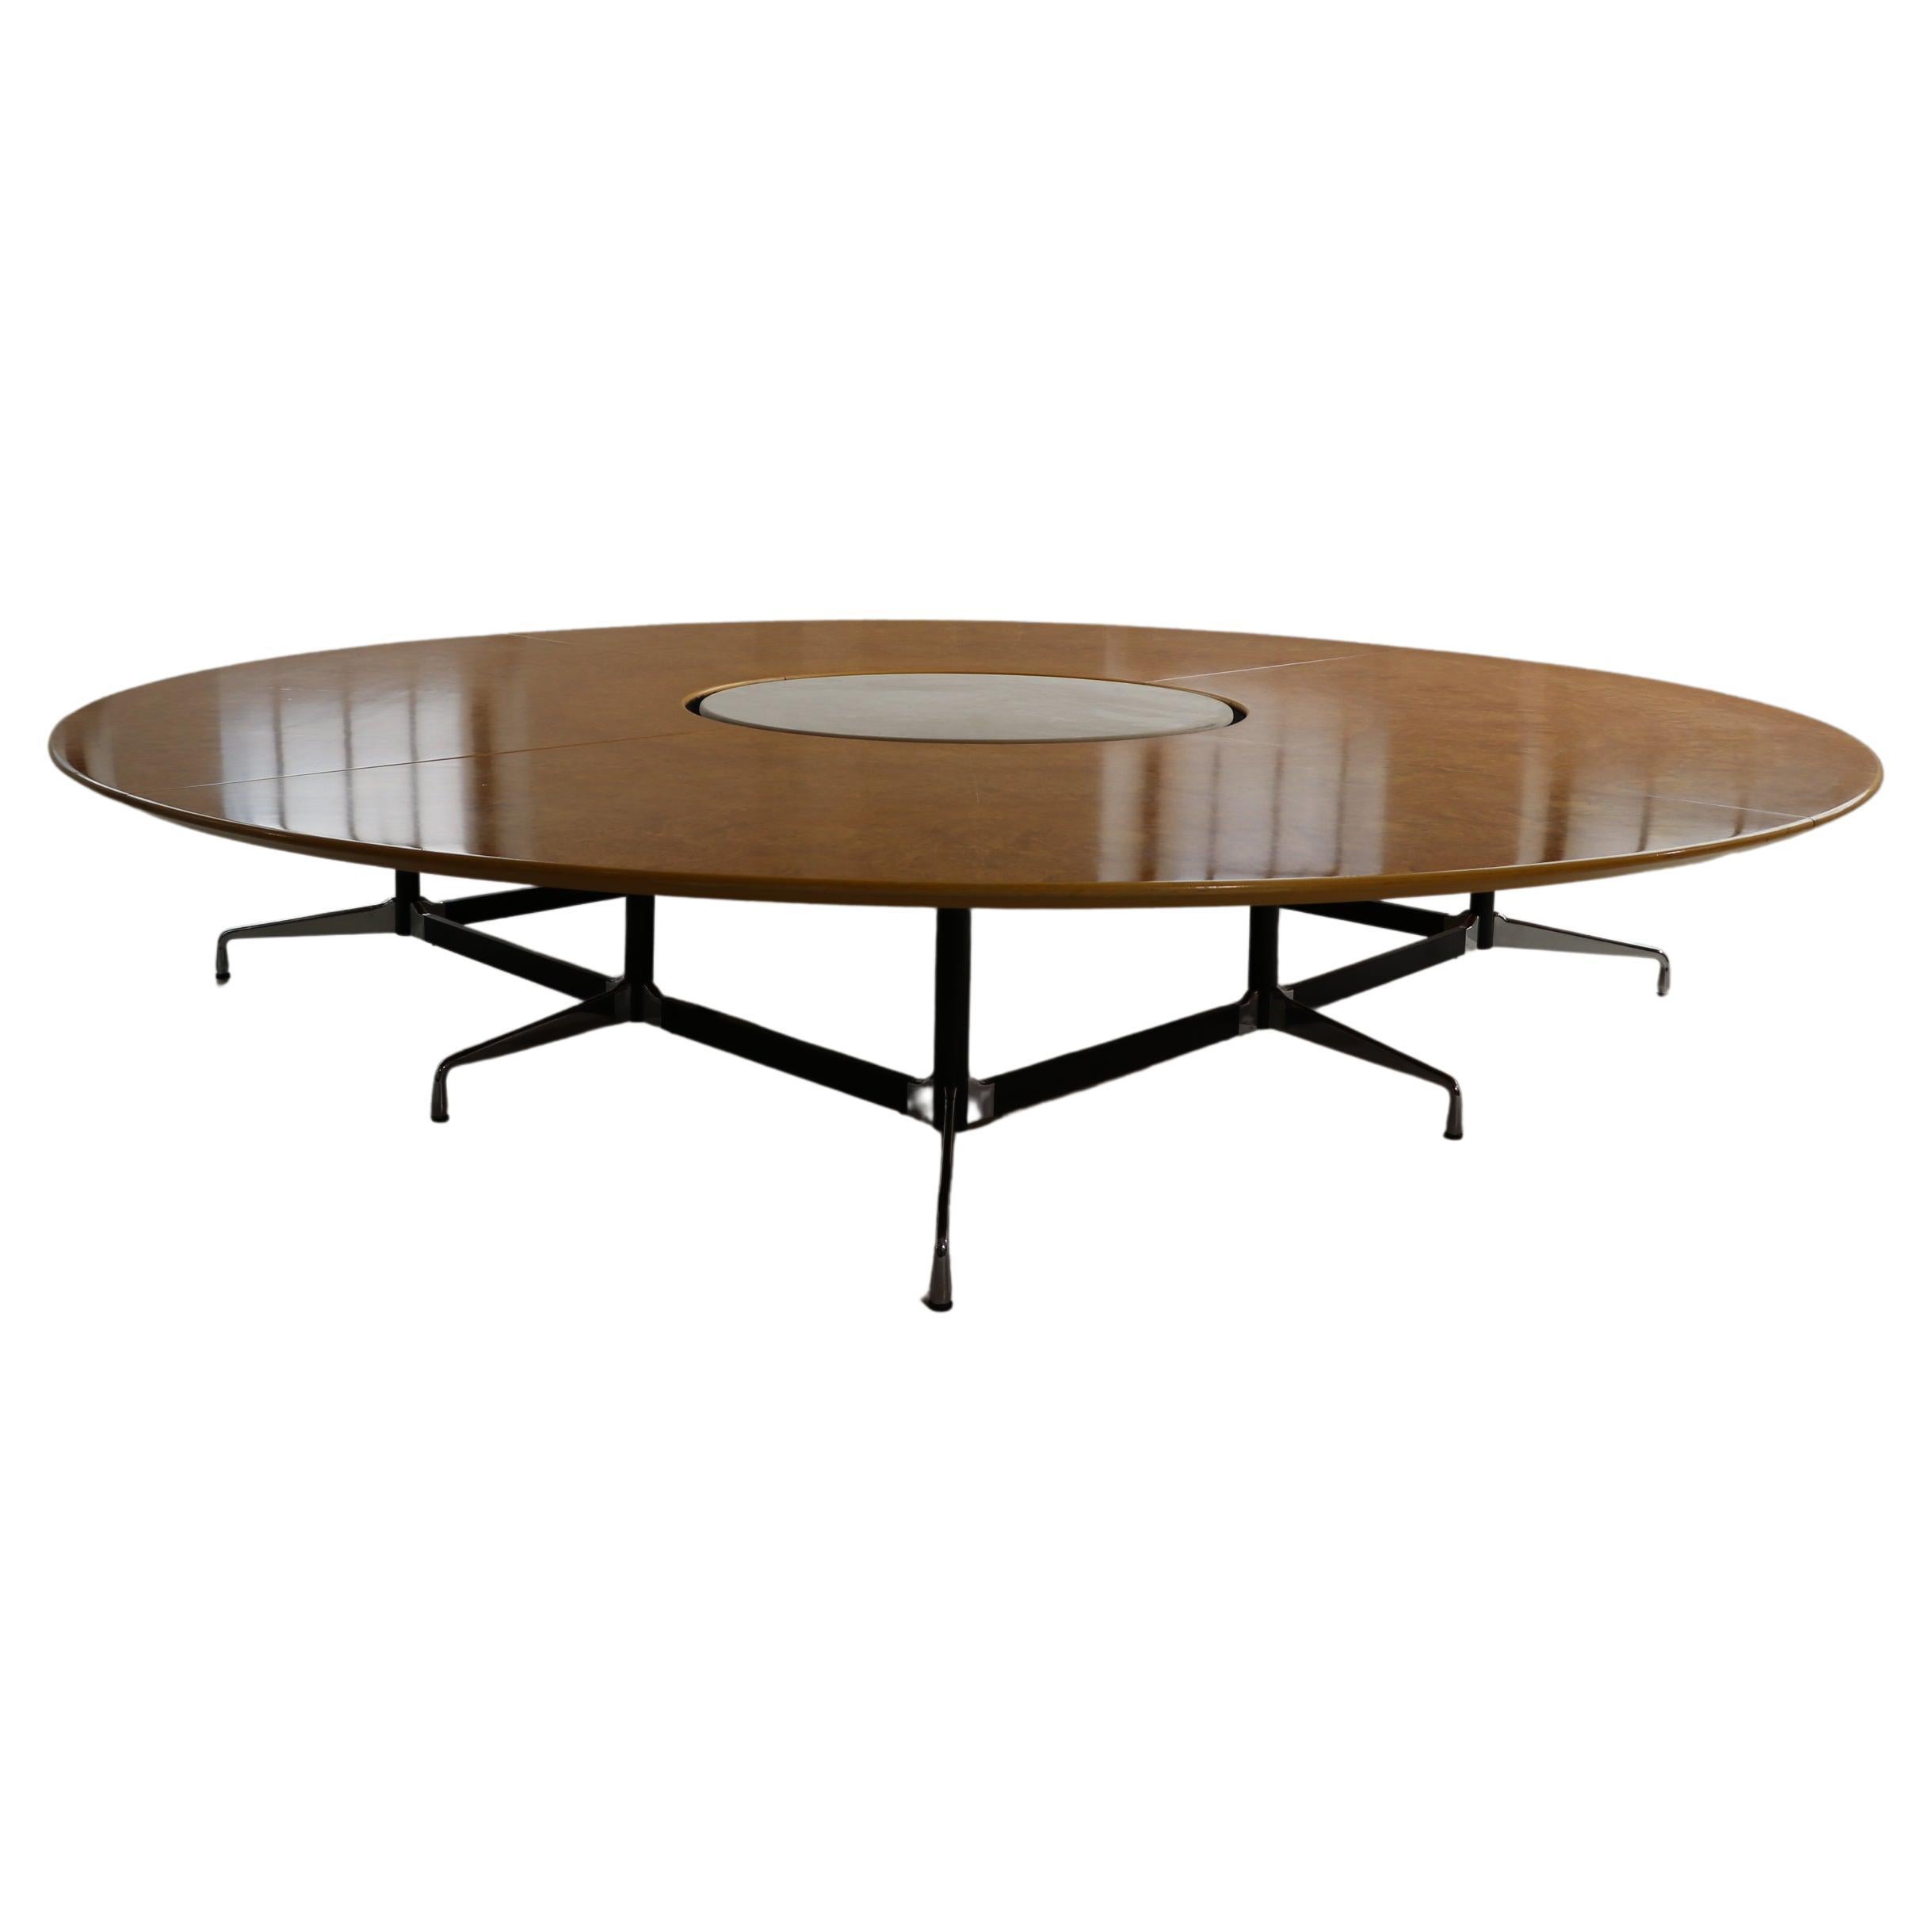 Table de conférence ronde Segmented Table Vitra/Herman Miller de Charles Eames, 400 cm